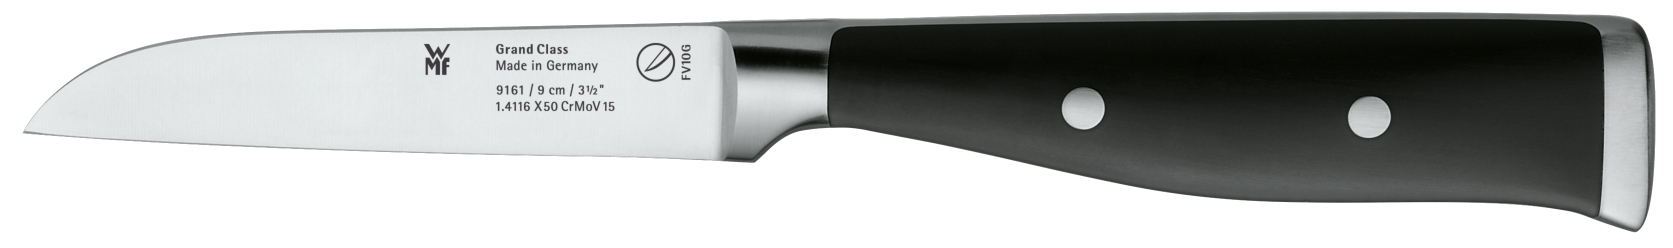 Овощной нож Grand Class 9 см нож для овощей regent inox длина 90 210 мм